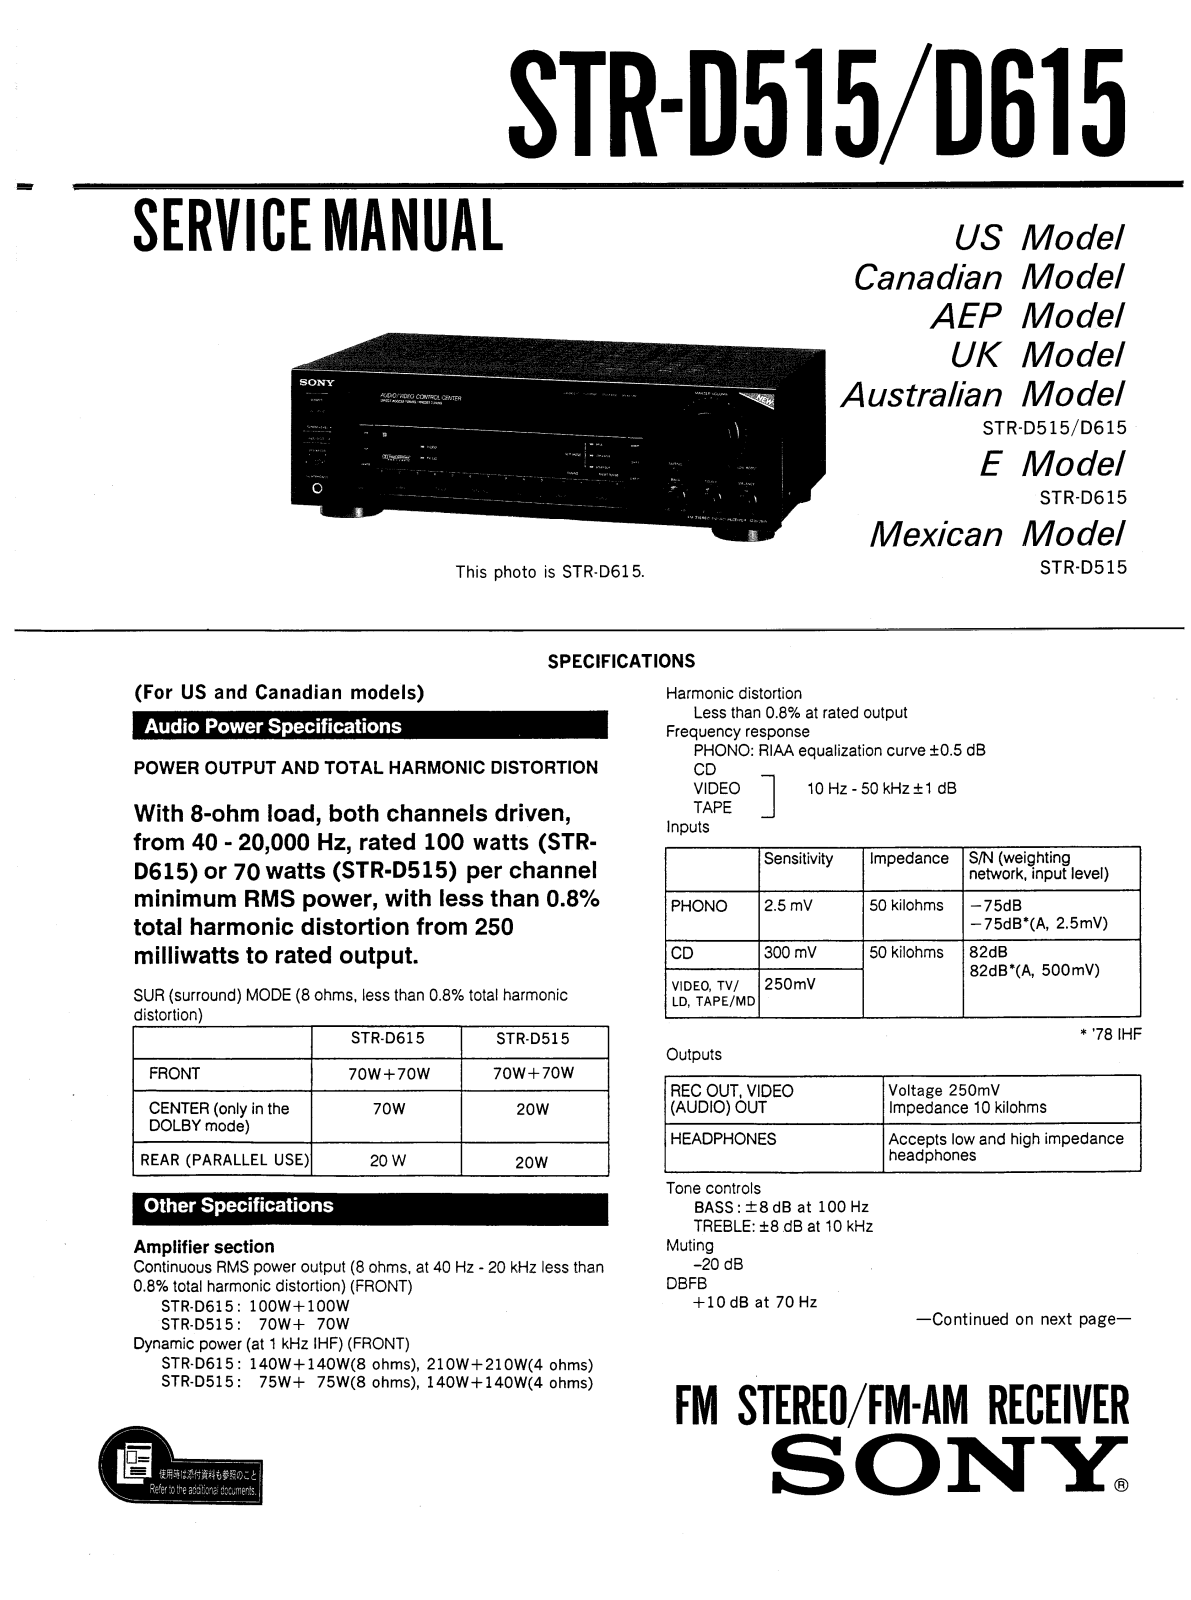 SONY STR D515 Service Manual